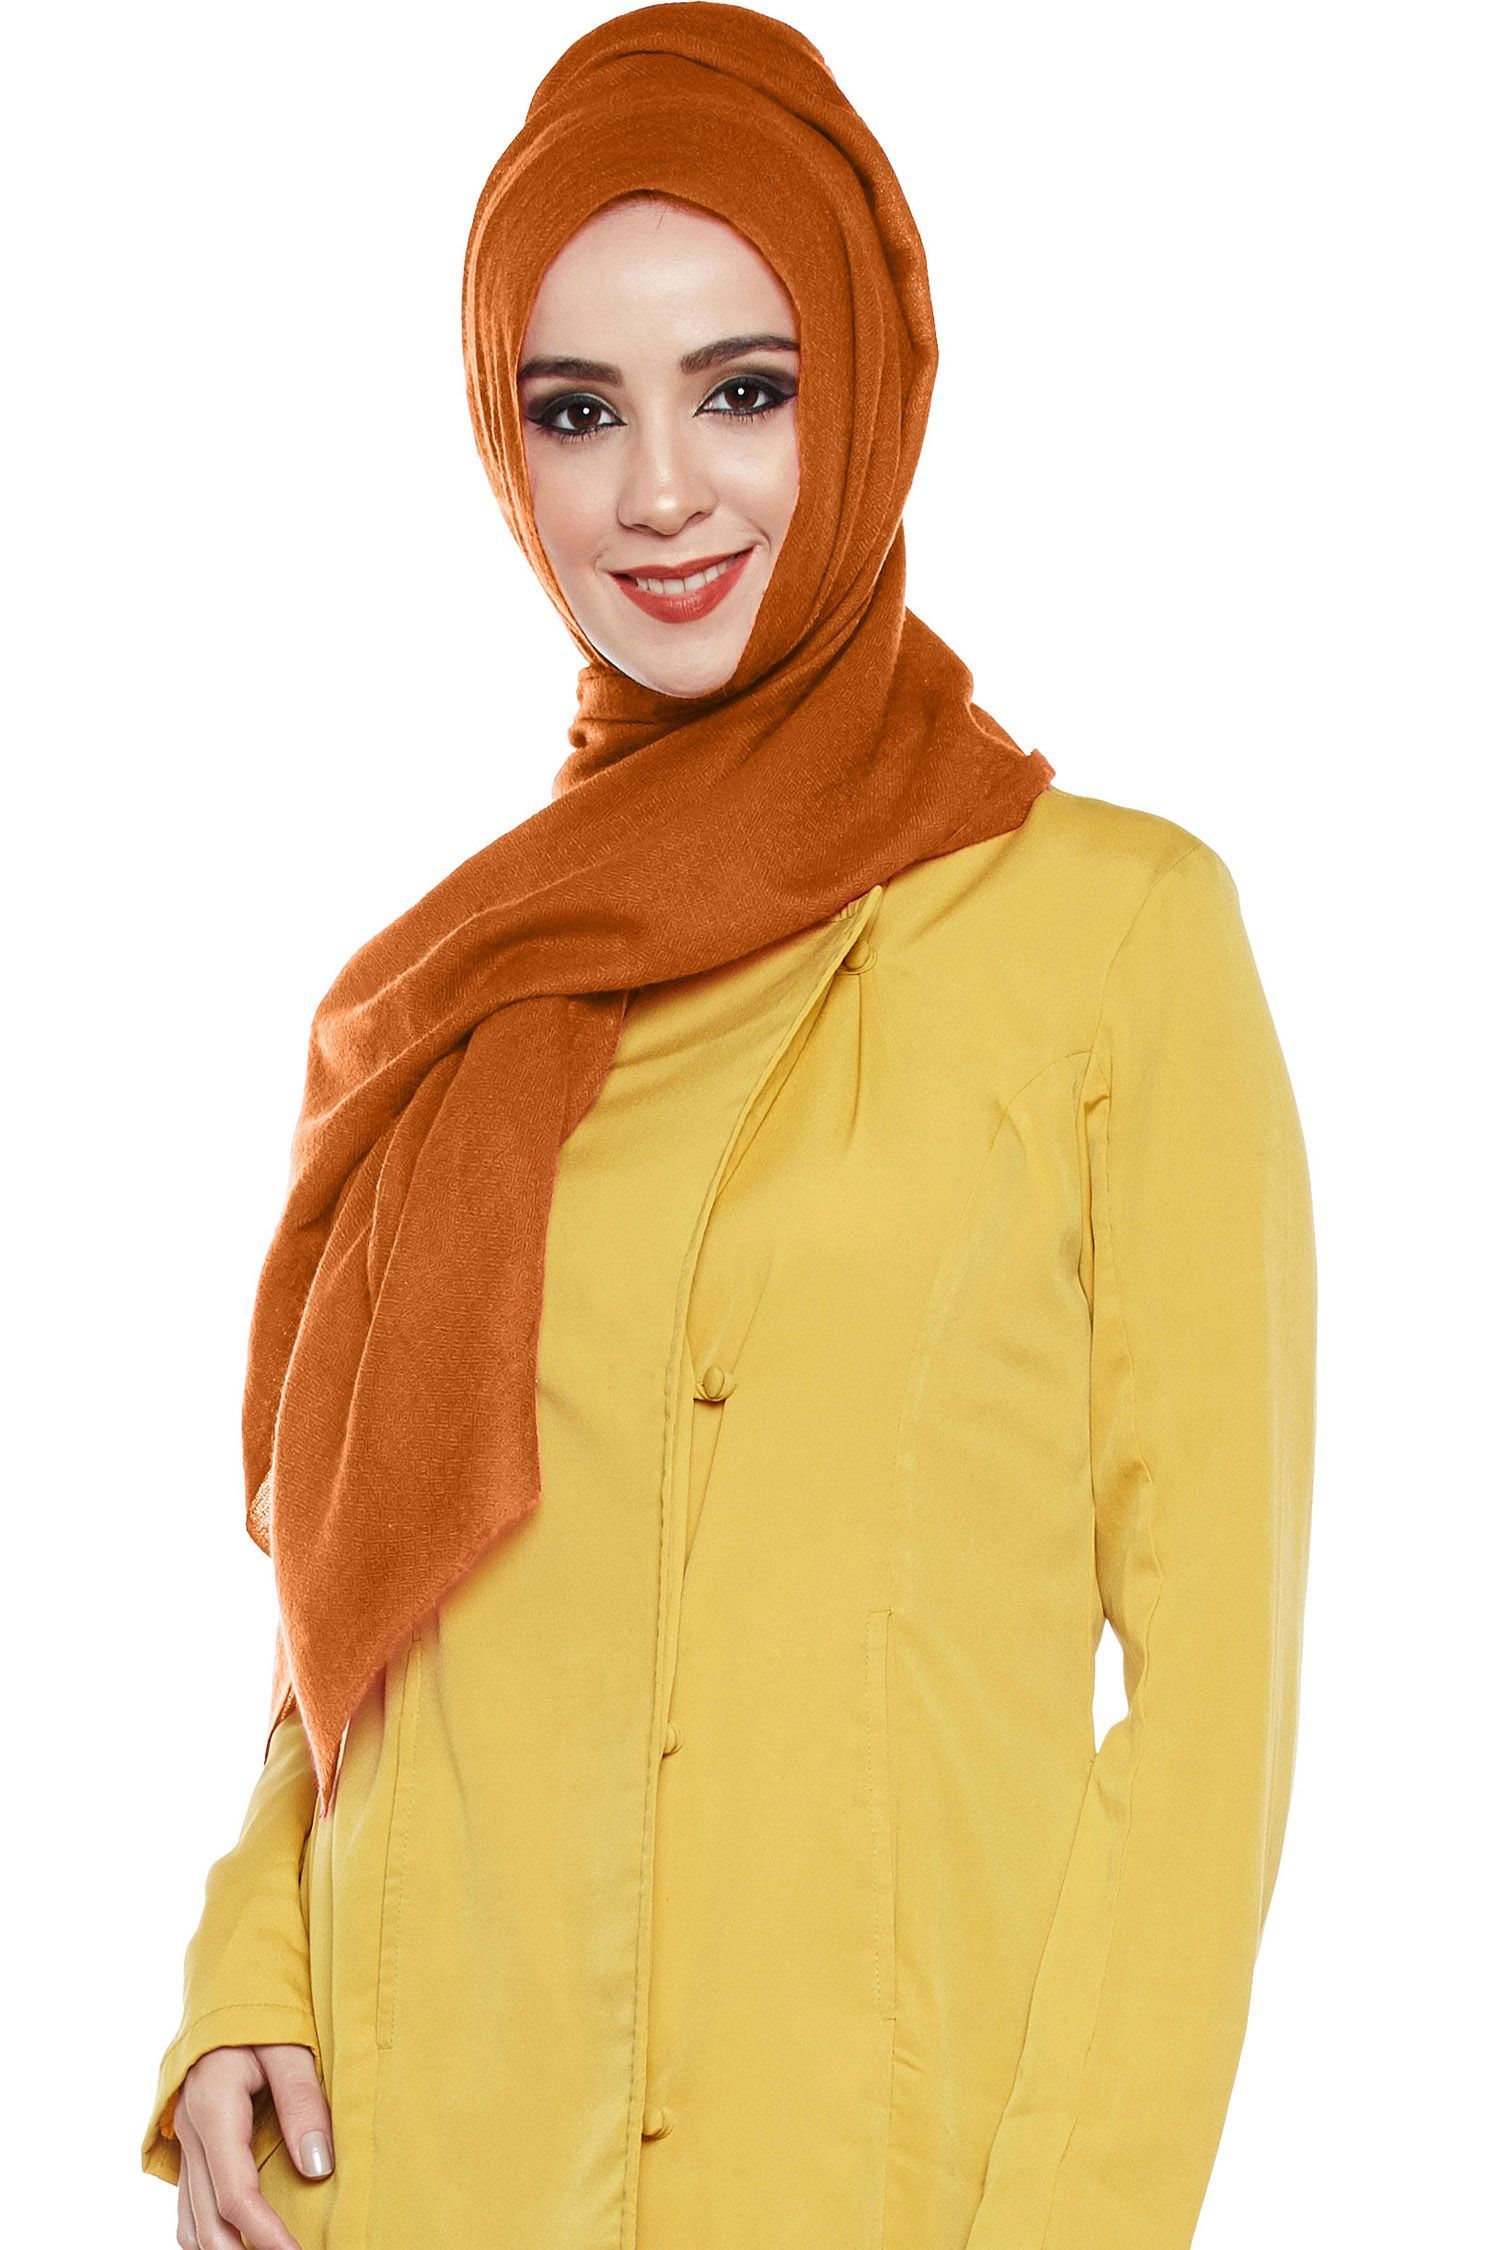 Sunset Yellow Pashmina Hijab | Handmade Cashmere Head Scarf